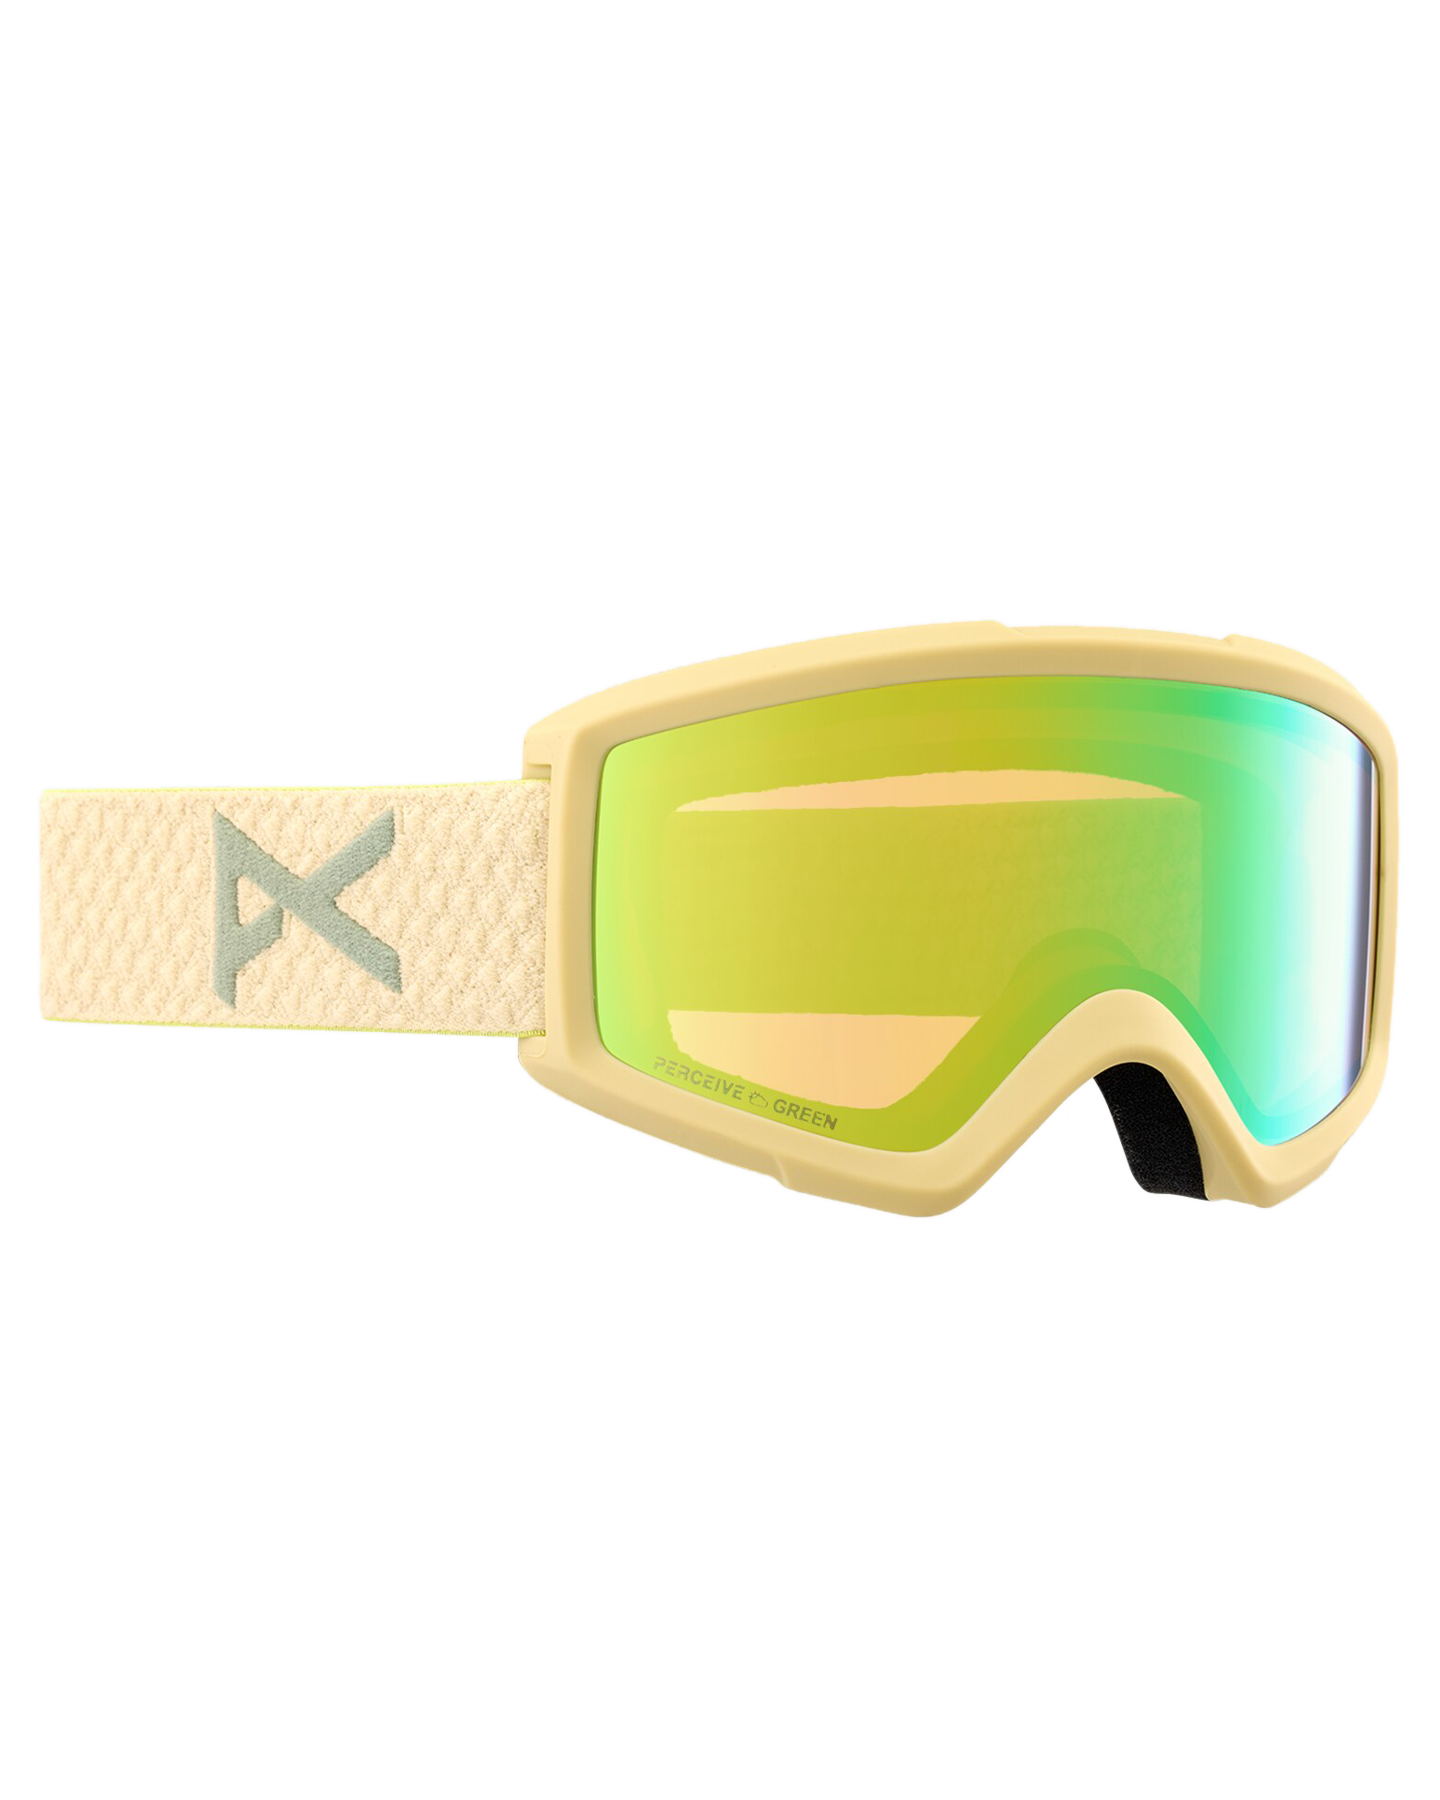 Anon Helix 2.0 Snow Goggles + Bonus Lens - Mushroom/Perceive Variable Green Lens Snow Goggles - Mens - Trojan Wake Ski Snow